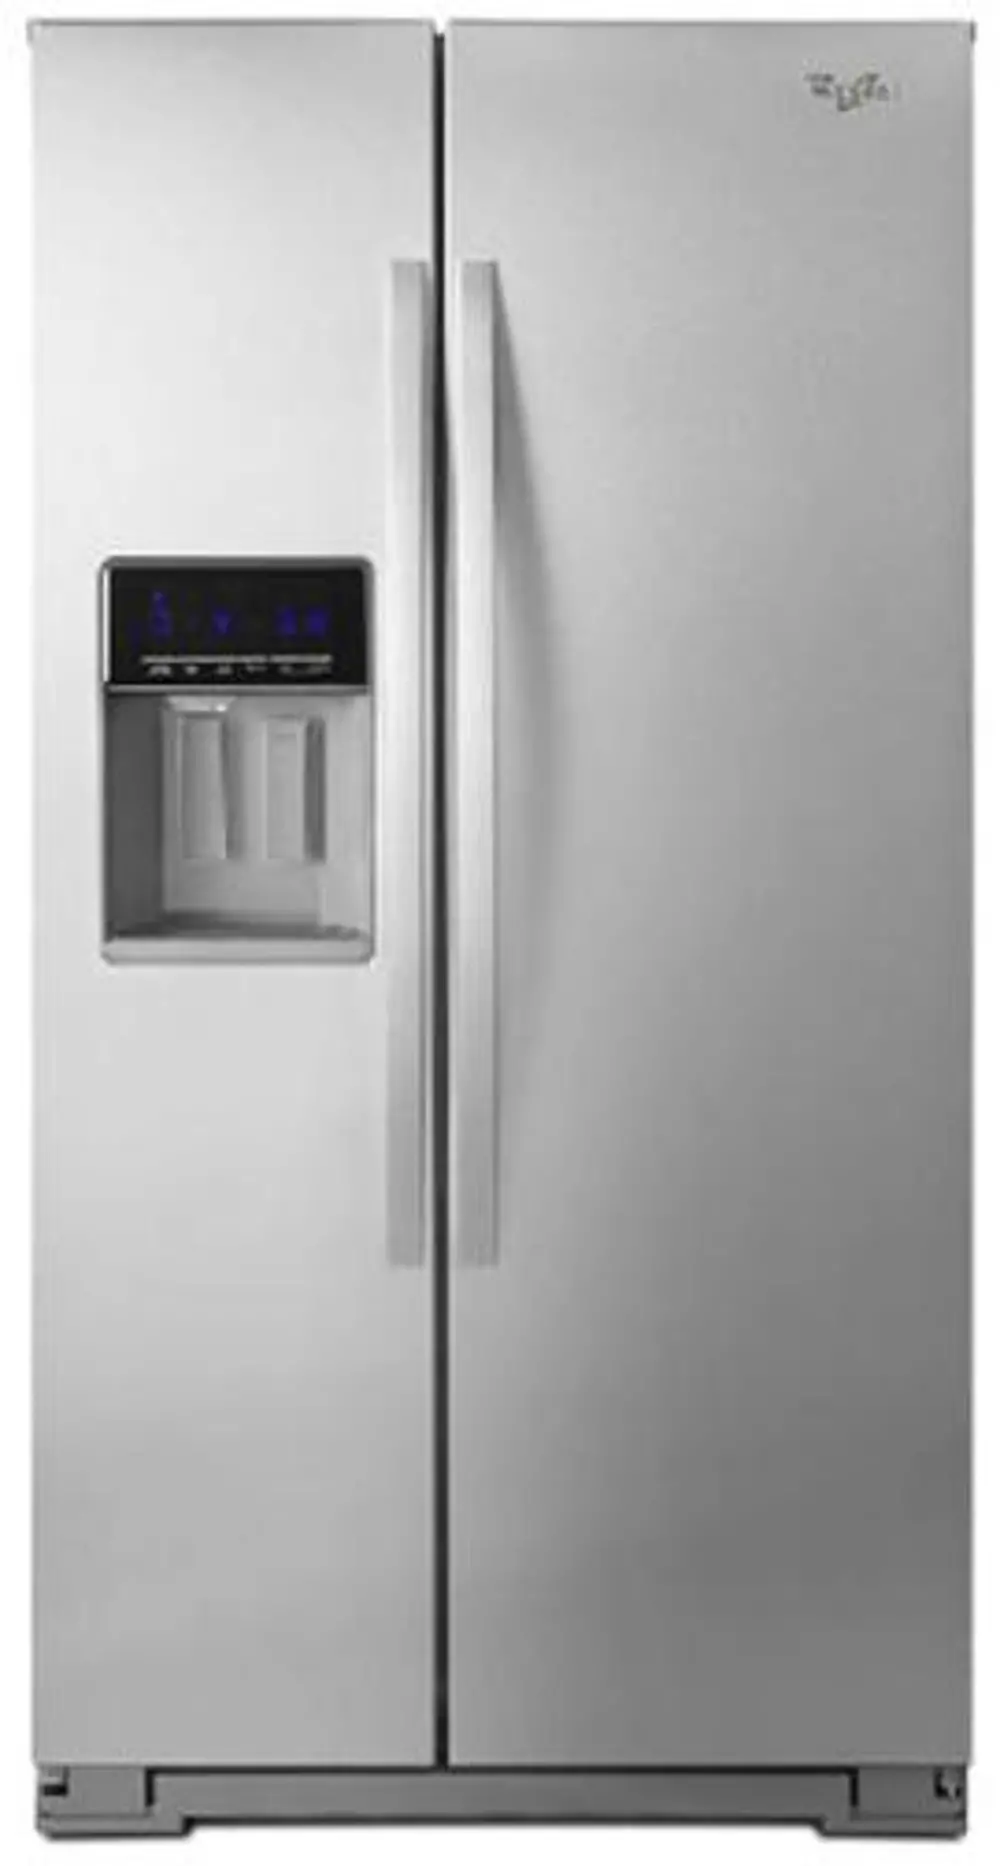 WRS576FIDM Whirlpool Stainless Steel Side-by-Side Refrigerator - 36 Inch-1